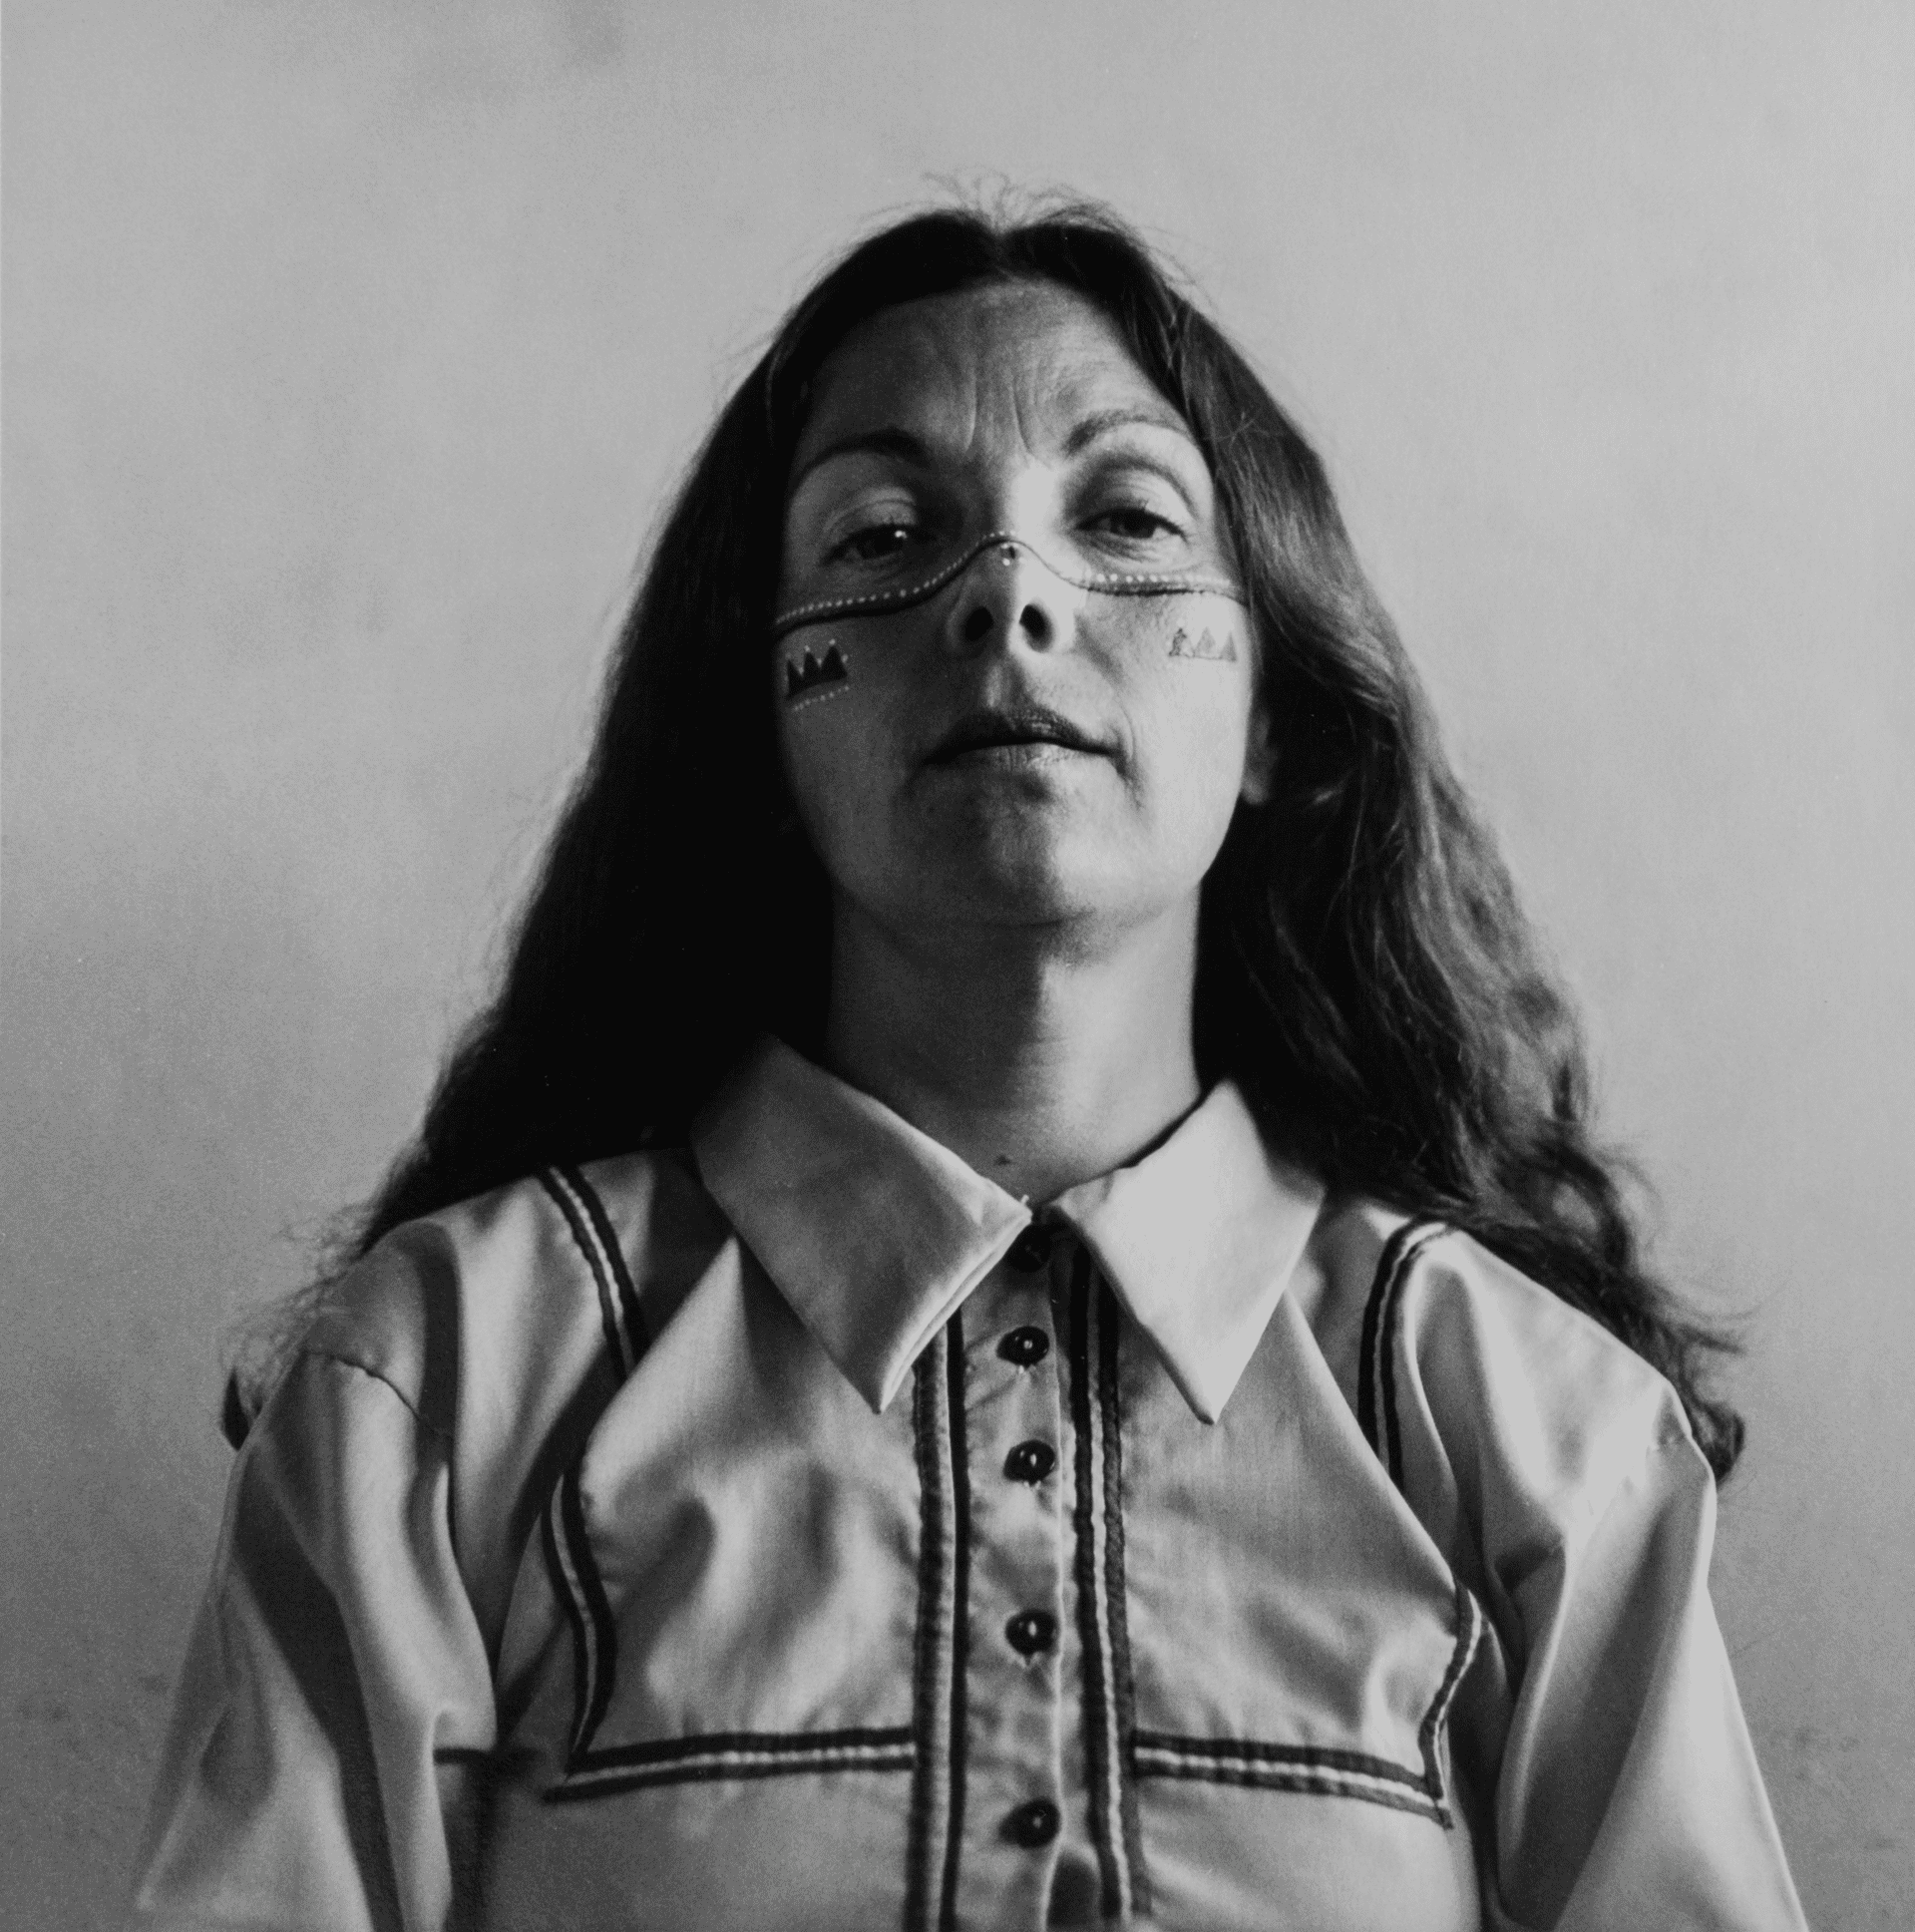 Autorretrato (self portrait), Desierto de Sonora, Mexico, 1979